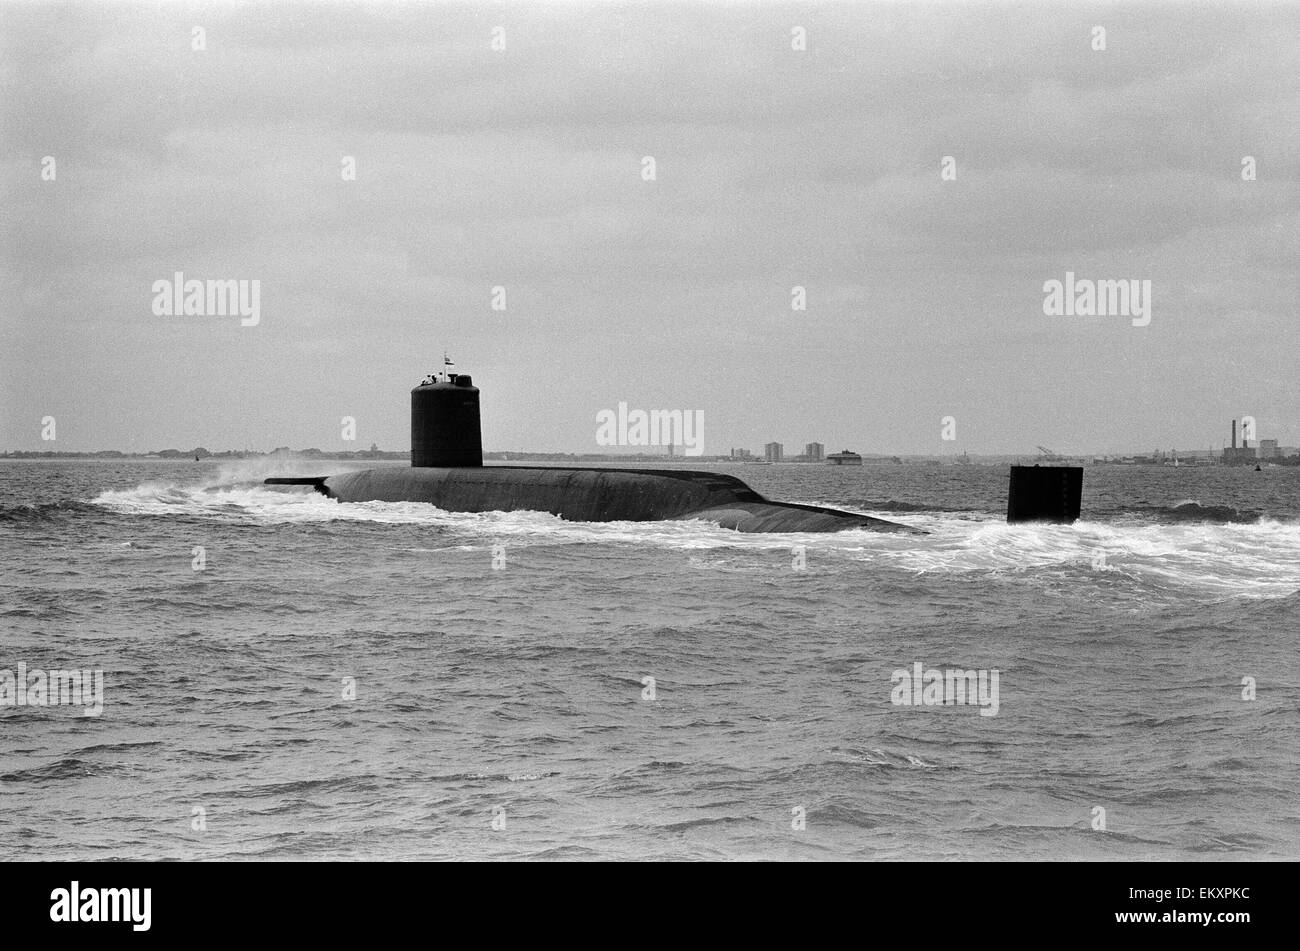 Polaris submarine hi-res stock photography and images - Alamy